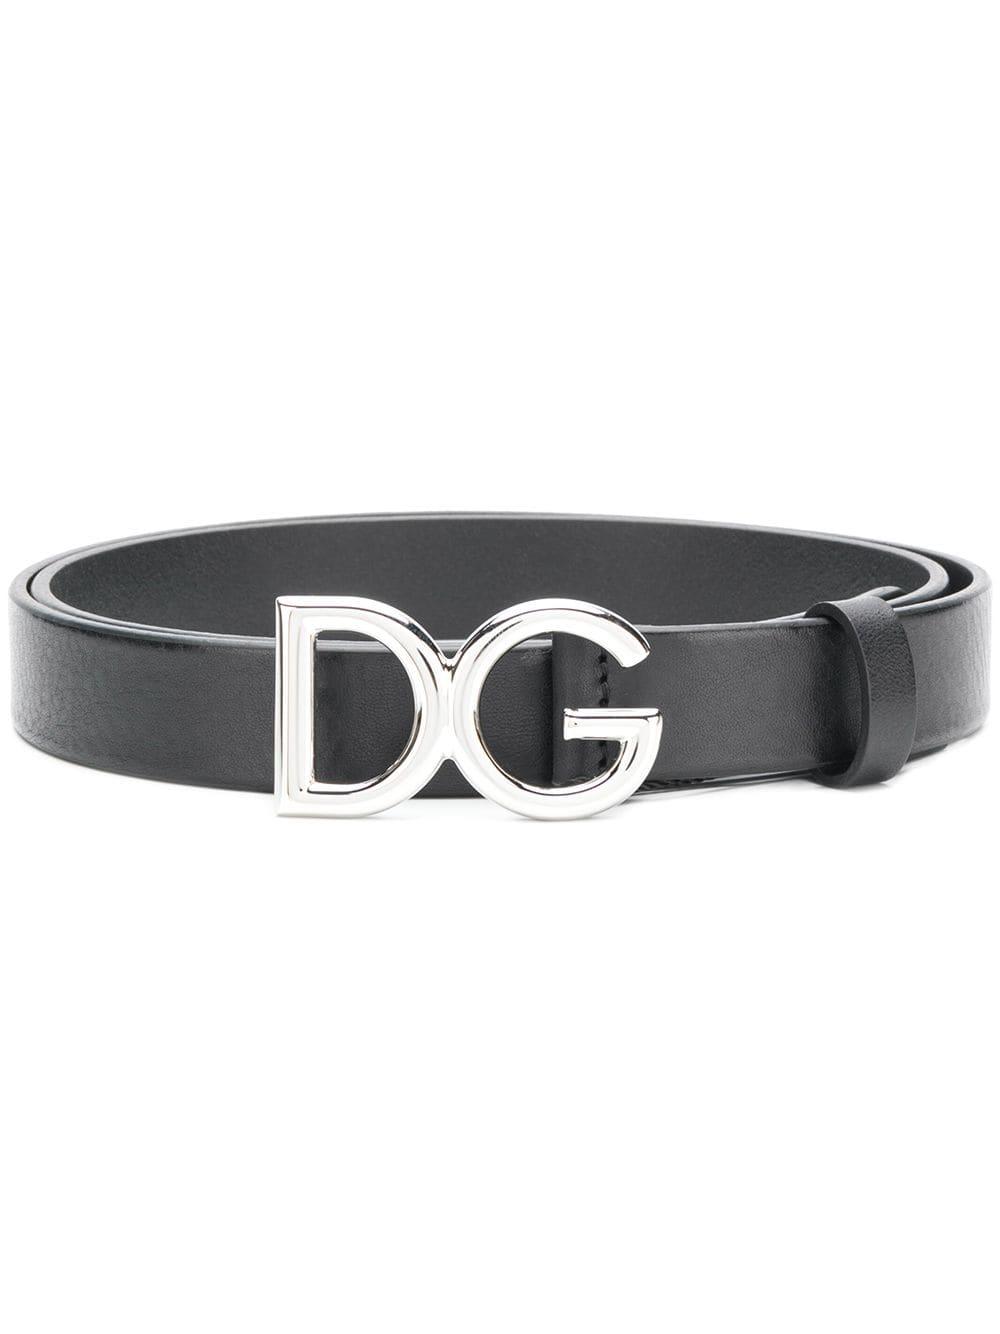 Dolce & Gabbana Leather Dg Millennial Logo Belt in Black for Men - Lyst